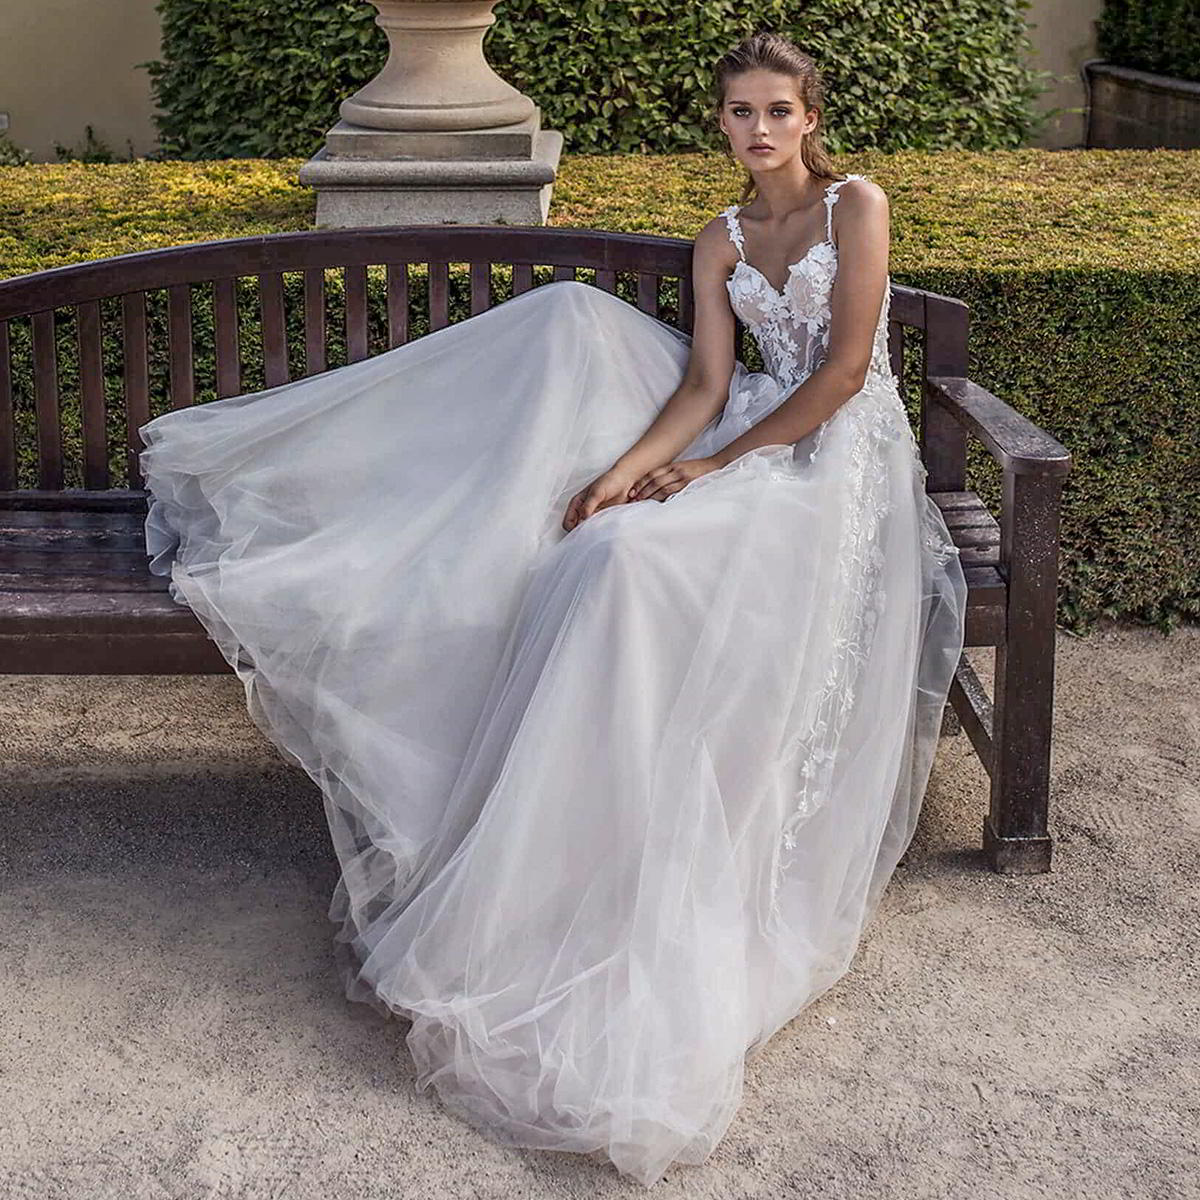 helena kolan 2019 bridal wedding inspirasi featured wedding gowns dresses and collection